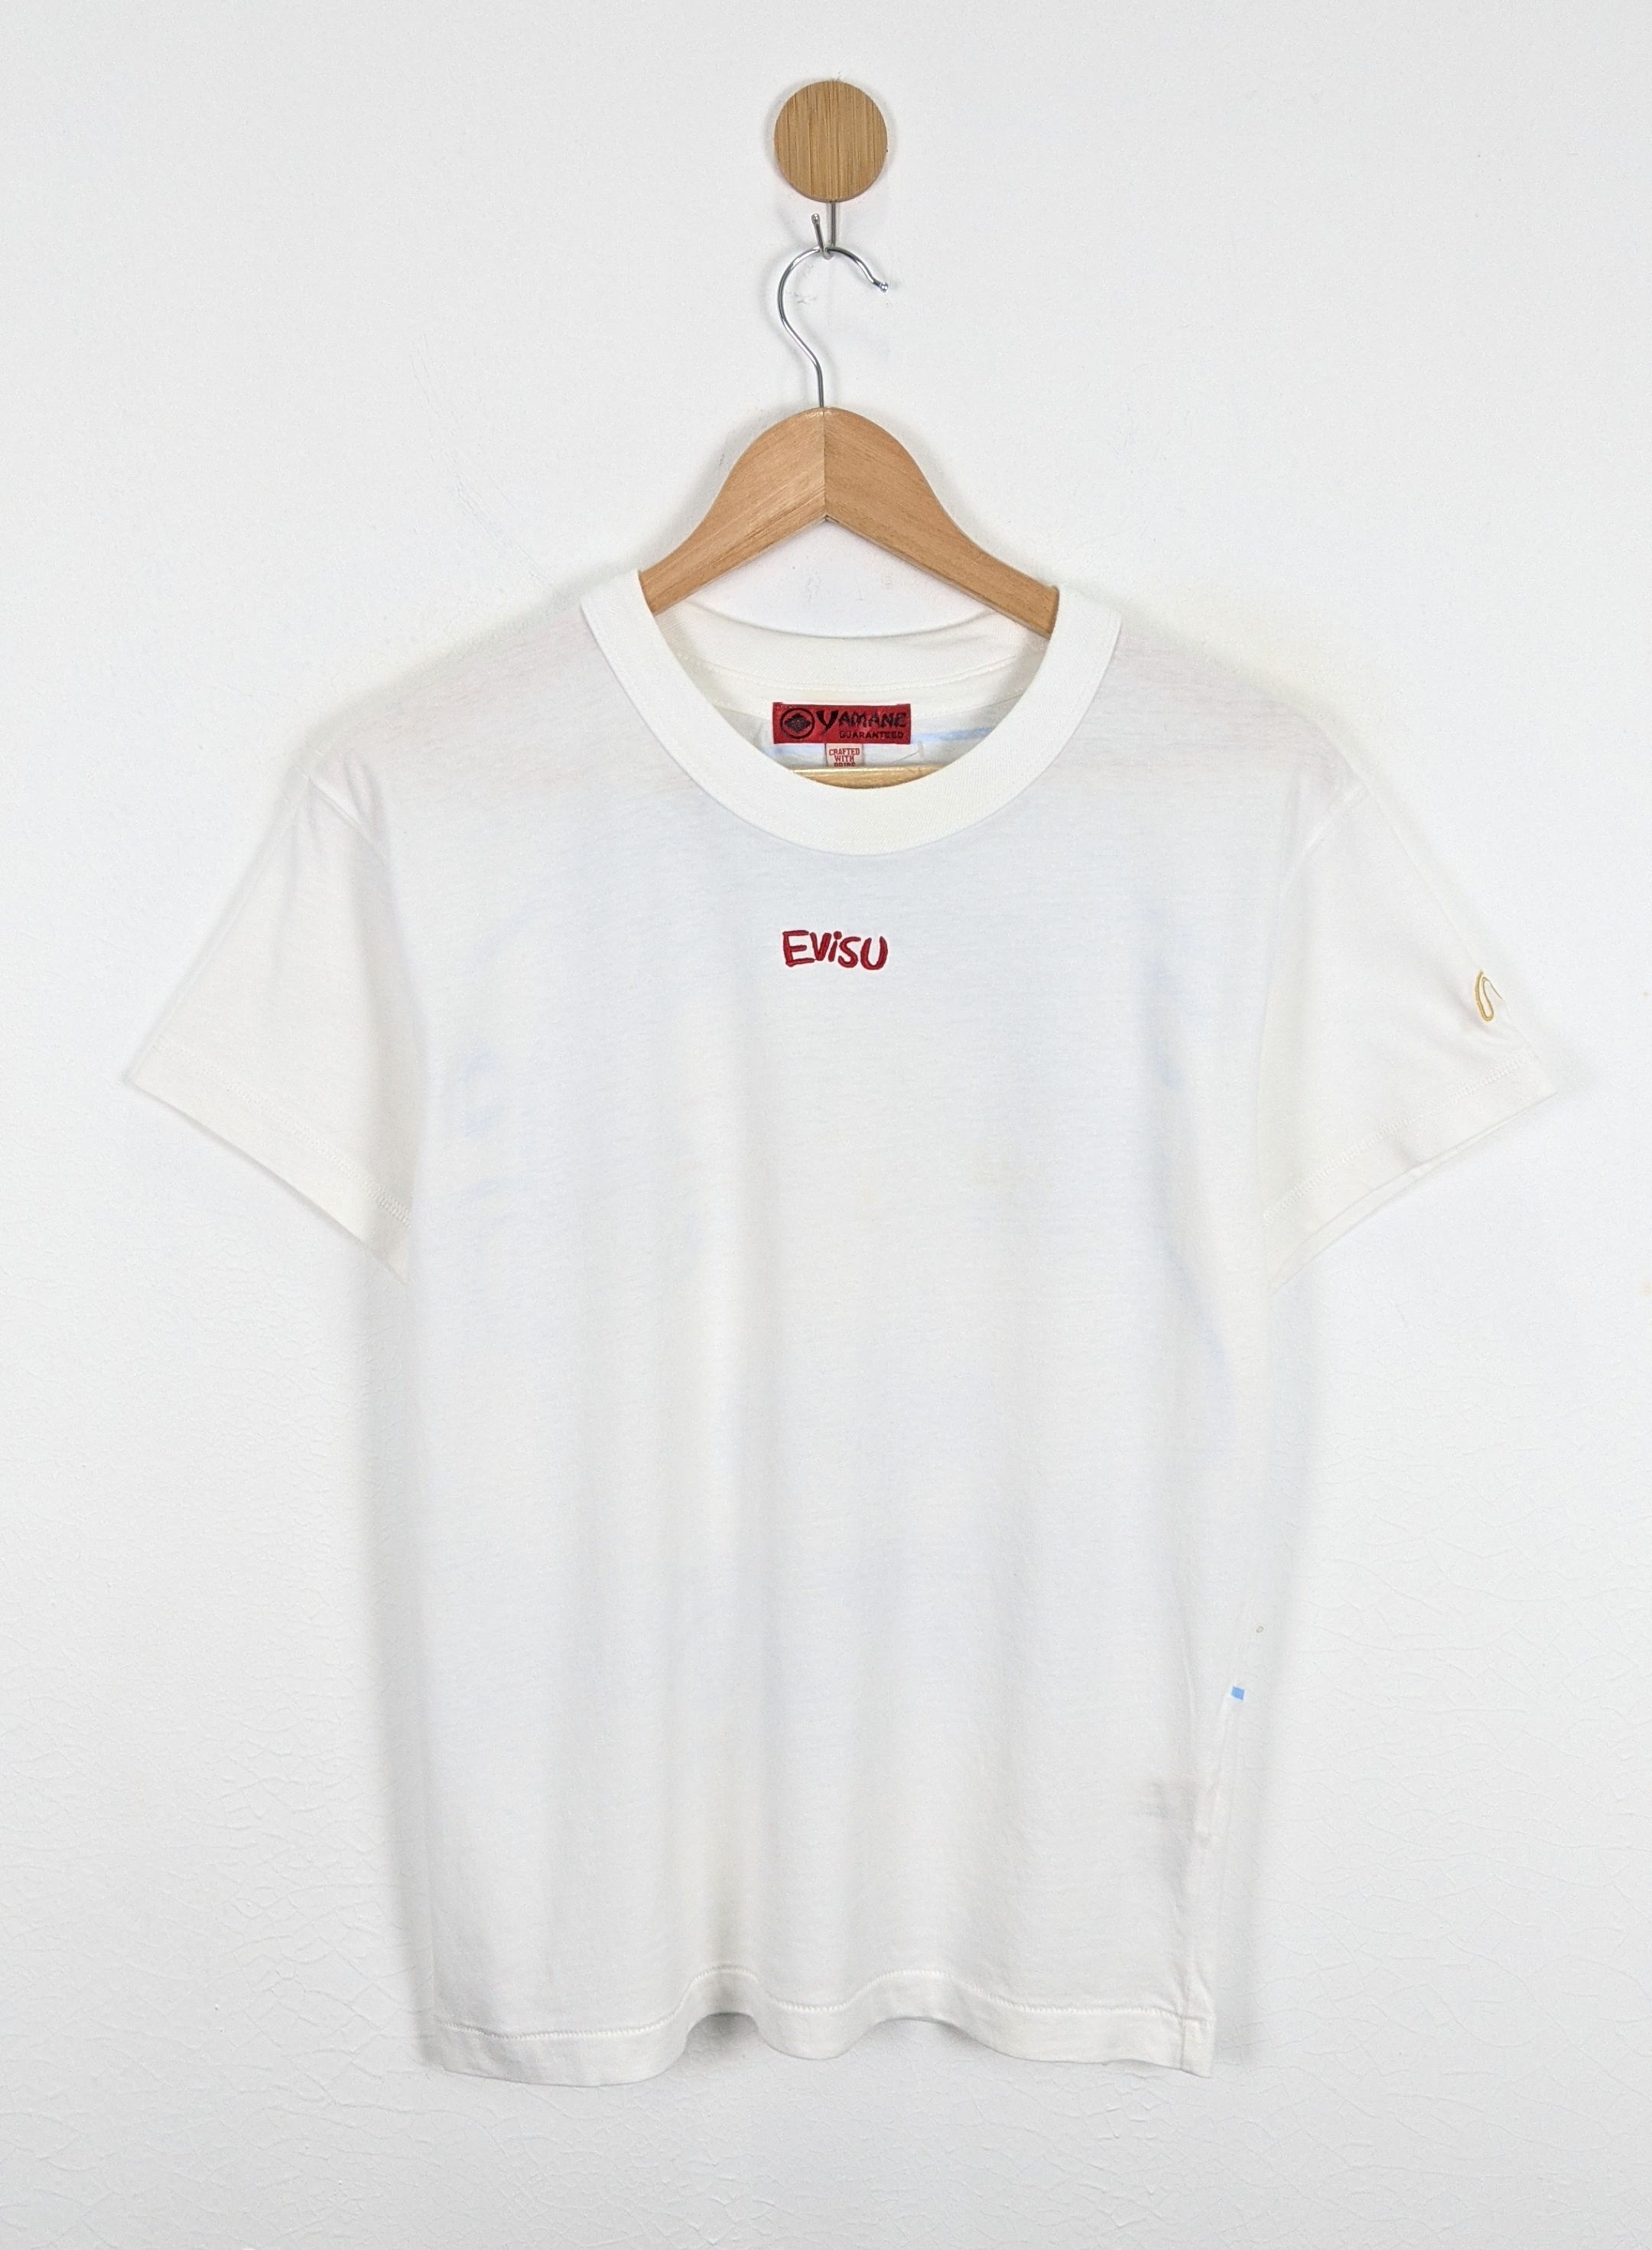 Evisu Yamane Embroidery shirt - 2